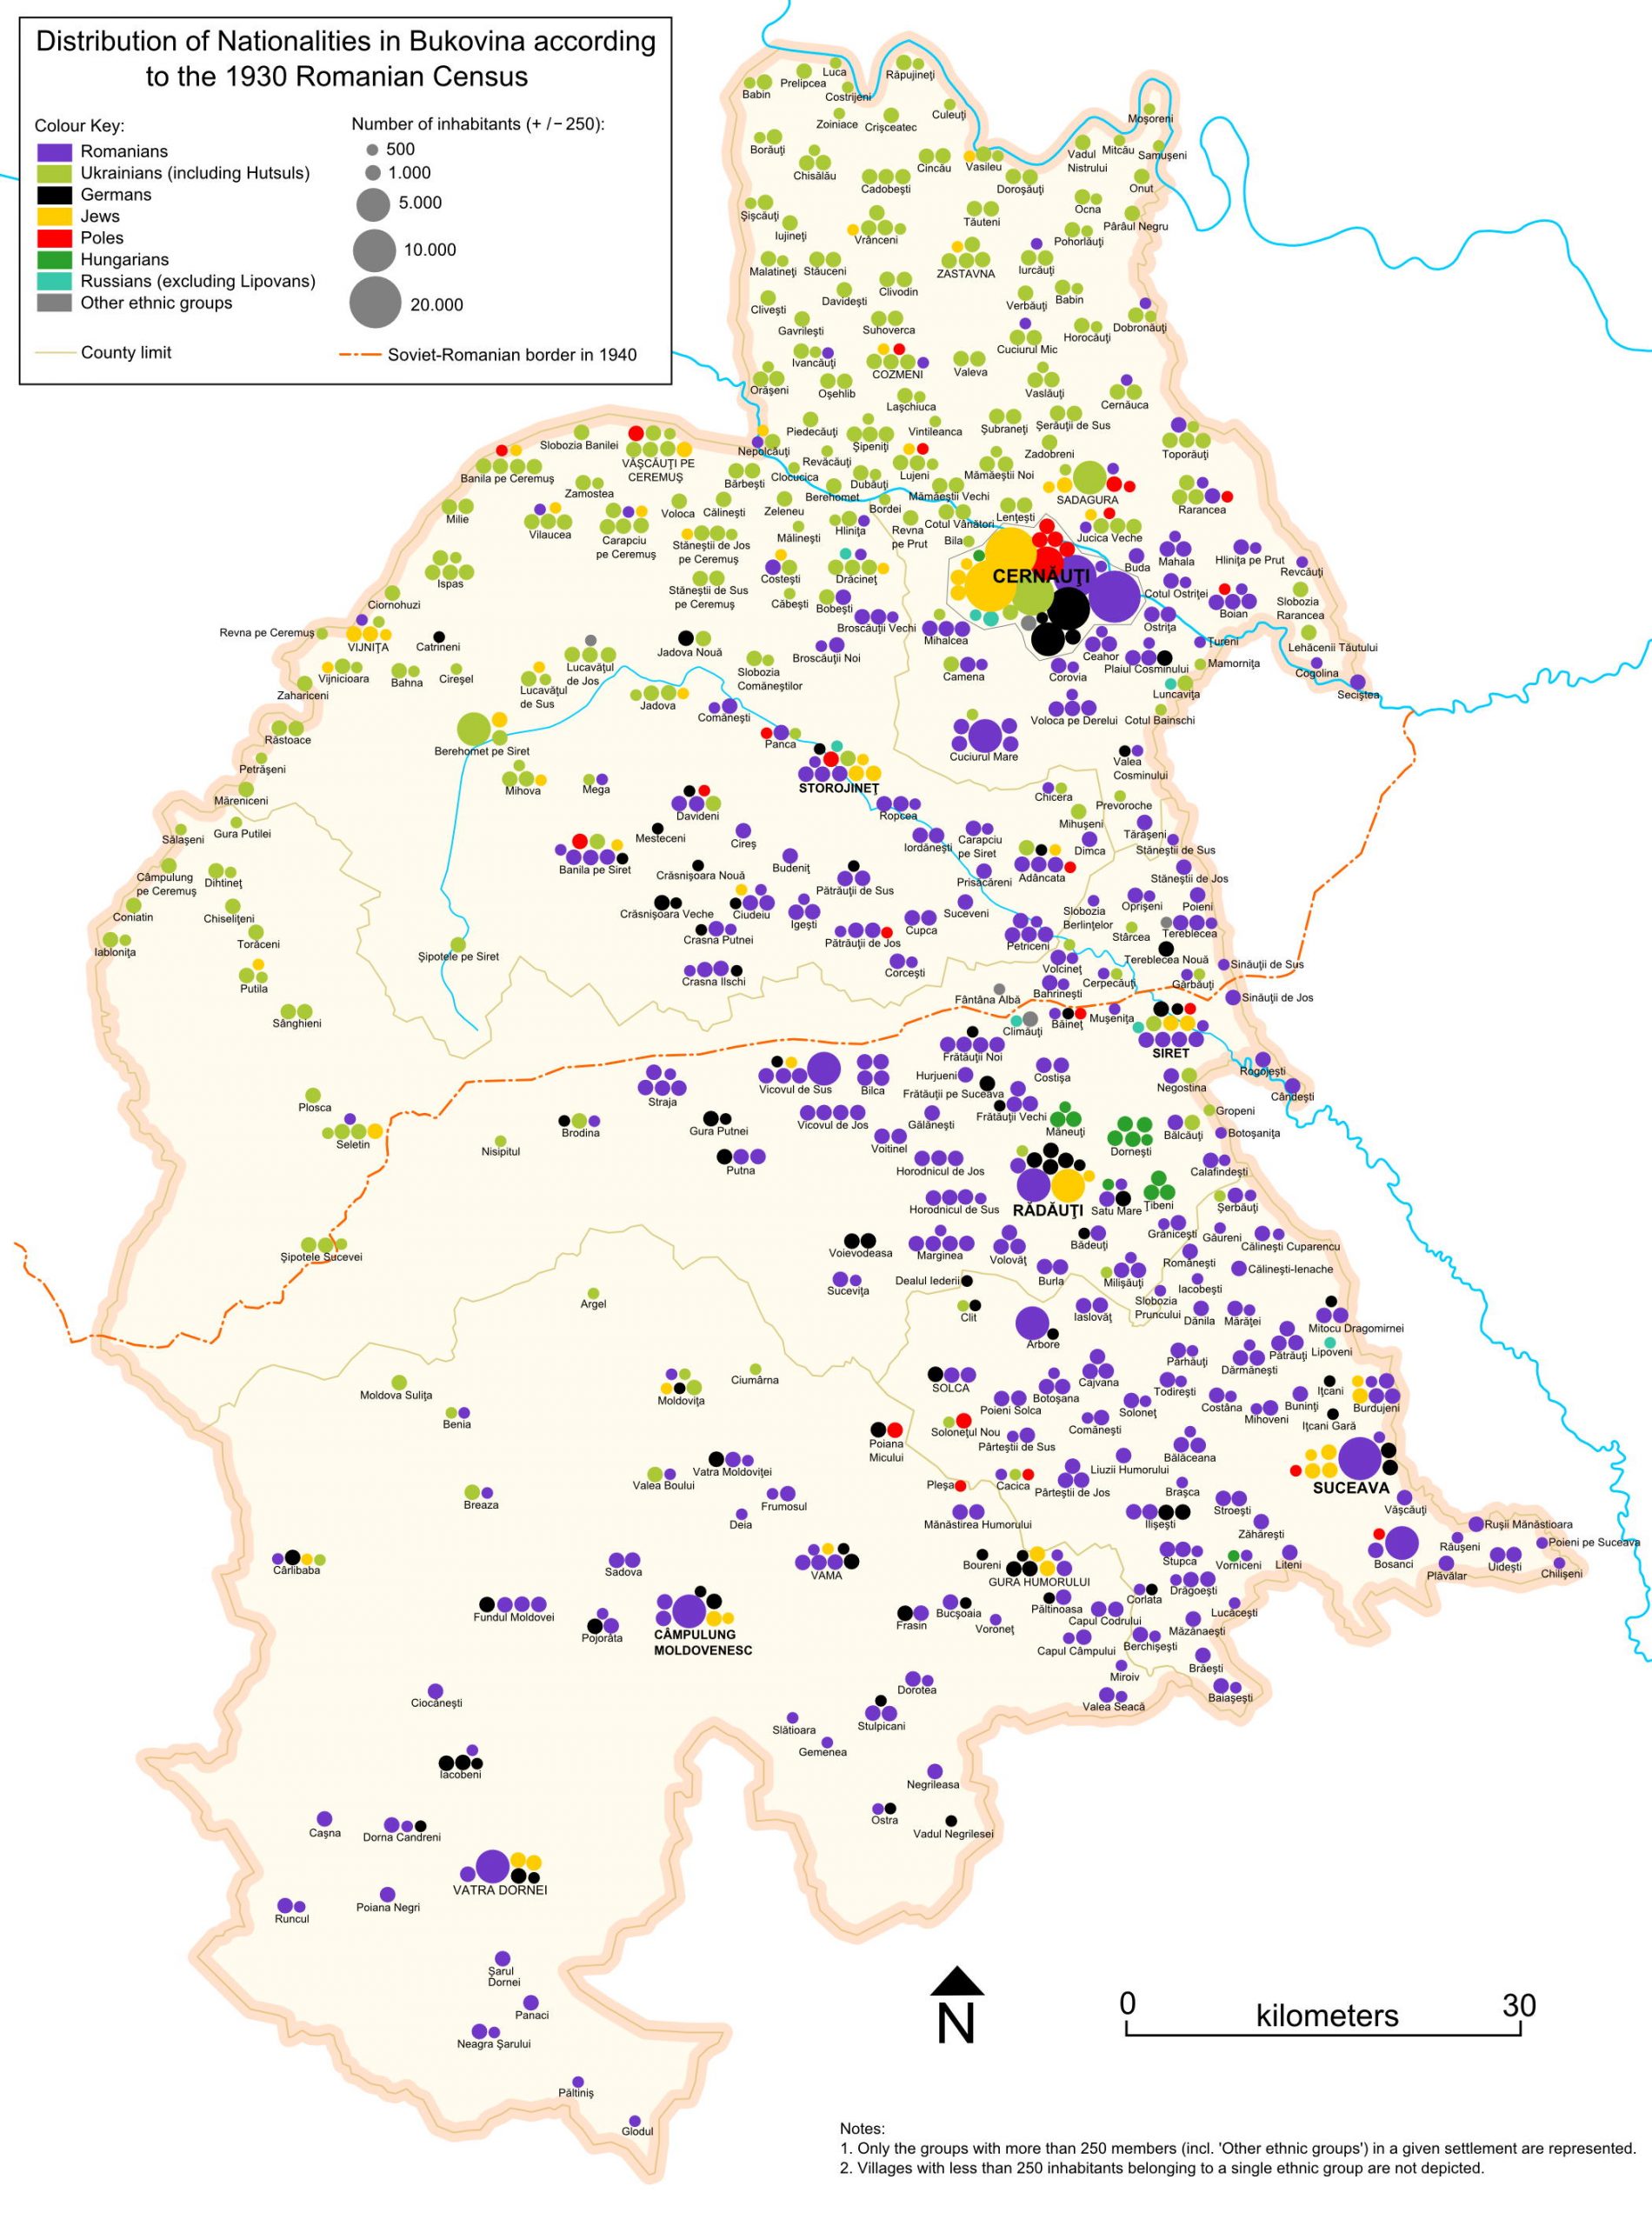 BSA.Image_Map_Bukovina_Ethnic_Distribution_1930-scaled.jpg